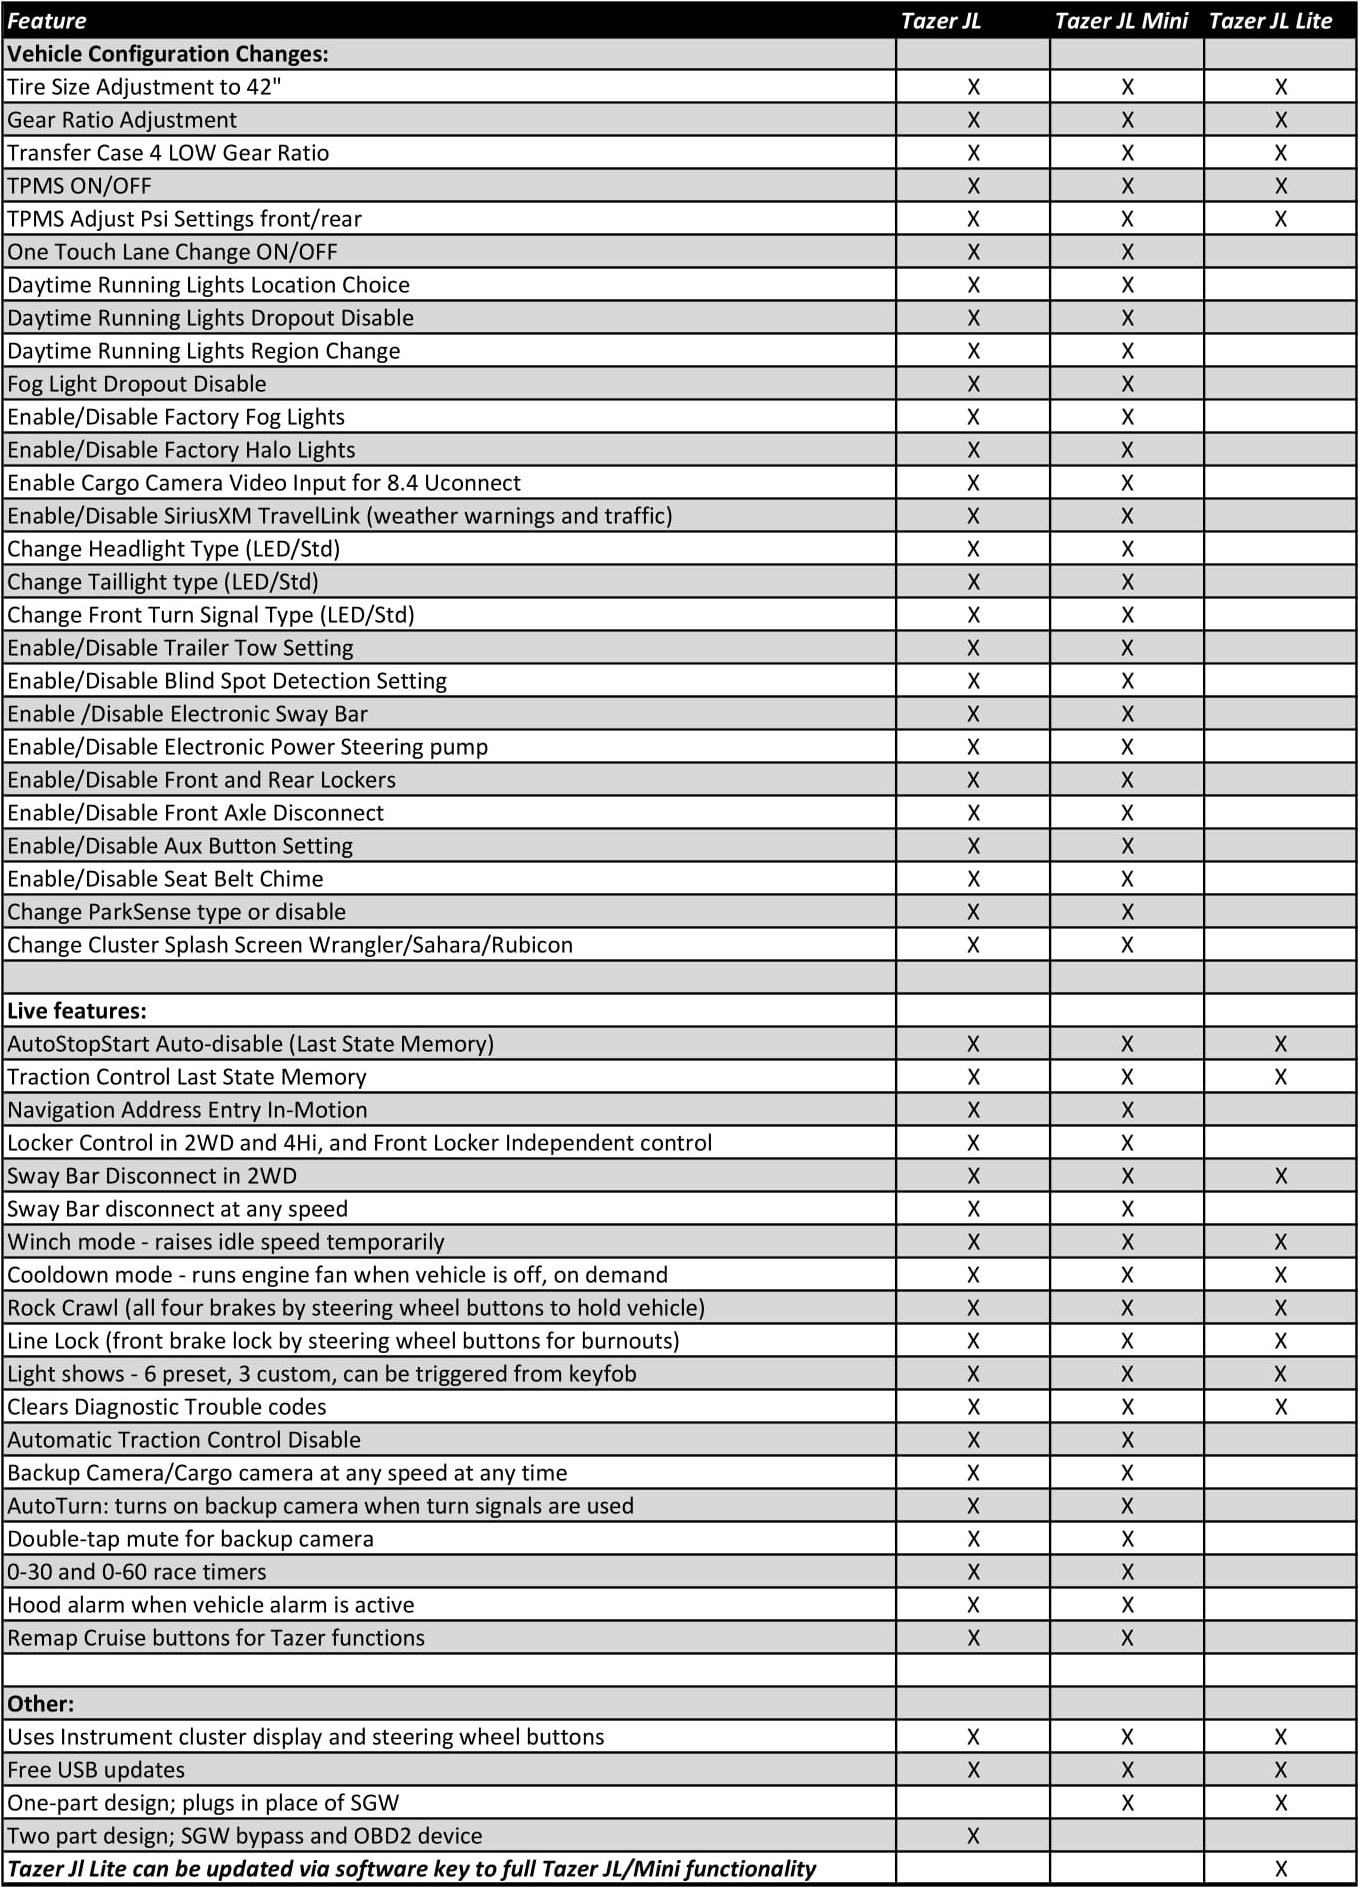 Z-Automotive Tazer JL Lite Comparison Chart